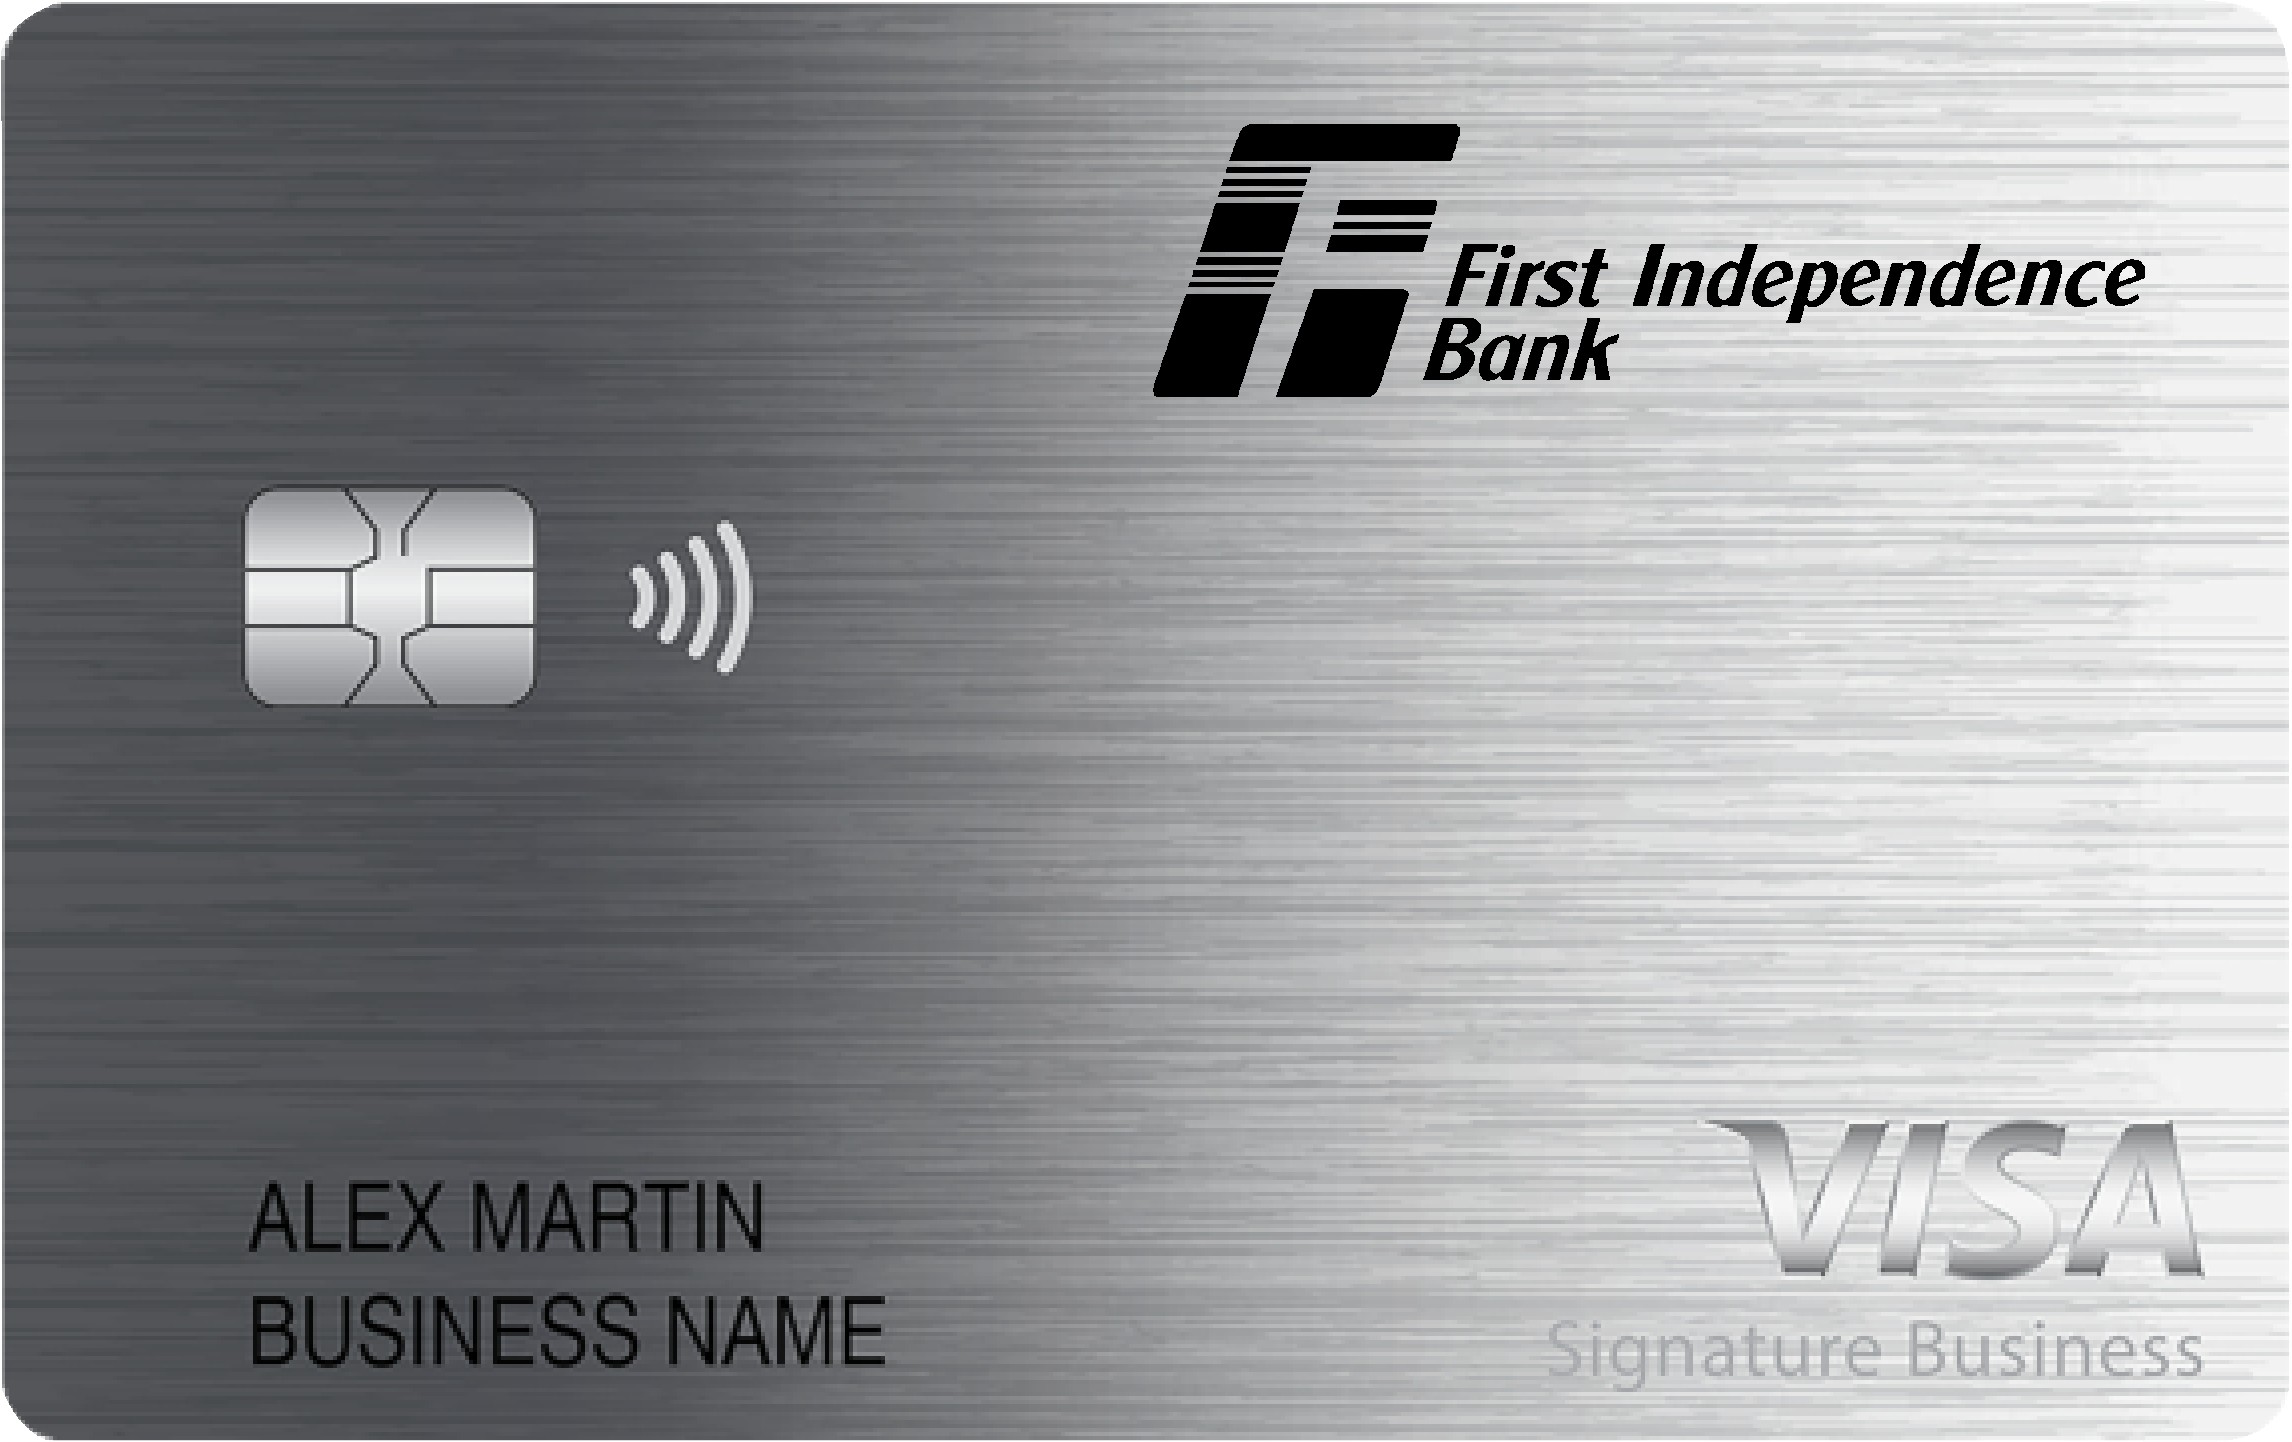 First Independence Bank Smart Business Rewards Card